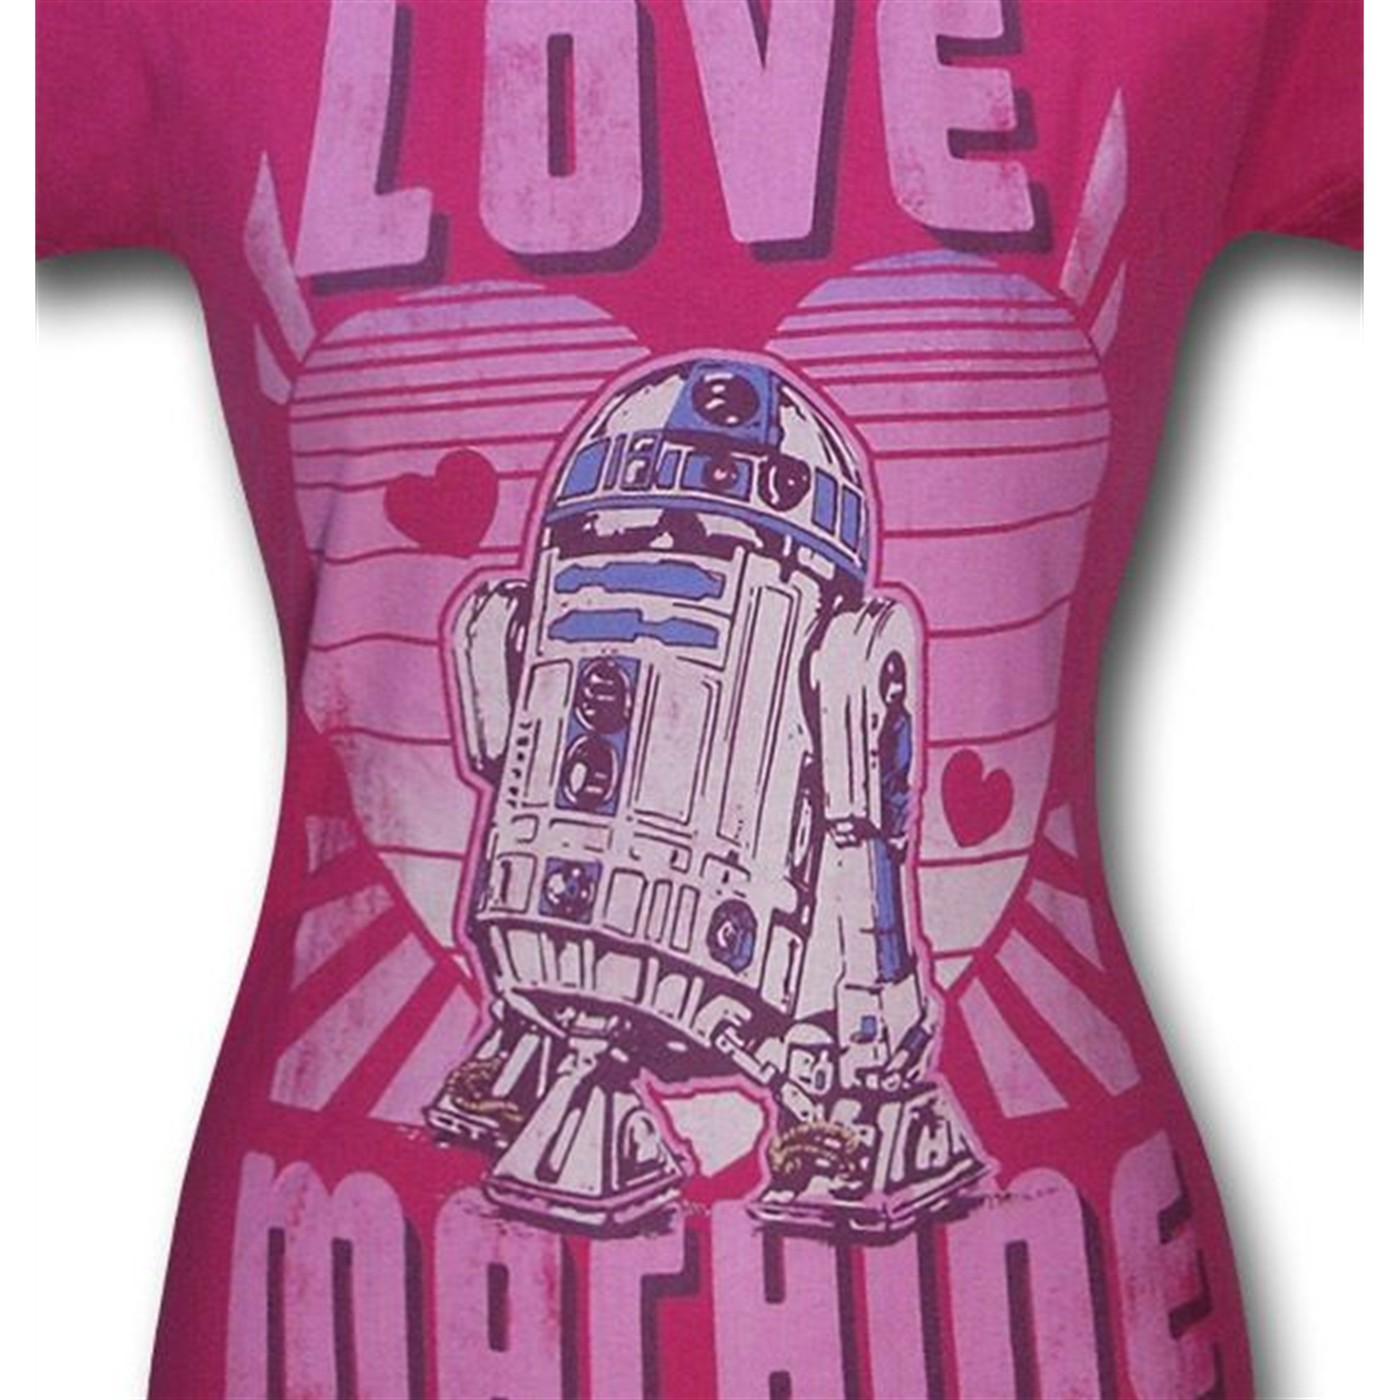 Star Wars R2D2 Love Machine Women's T-Shirt